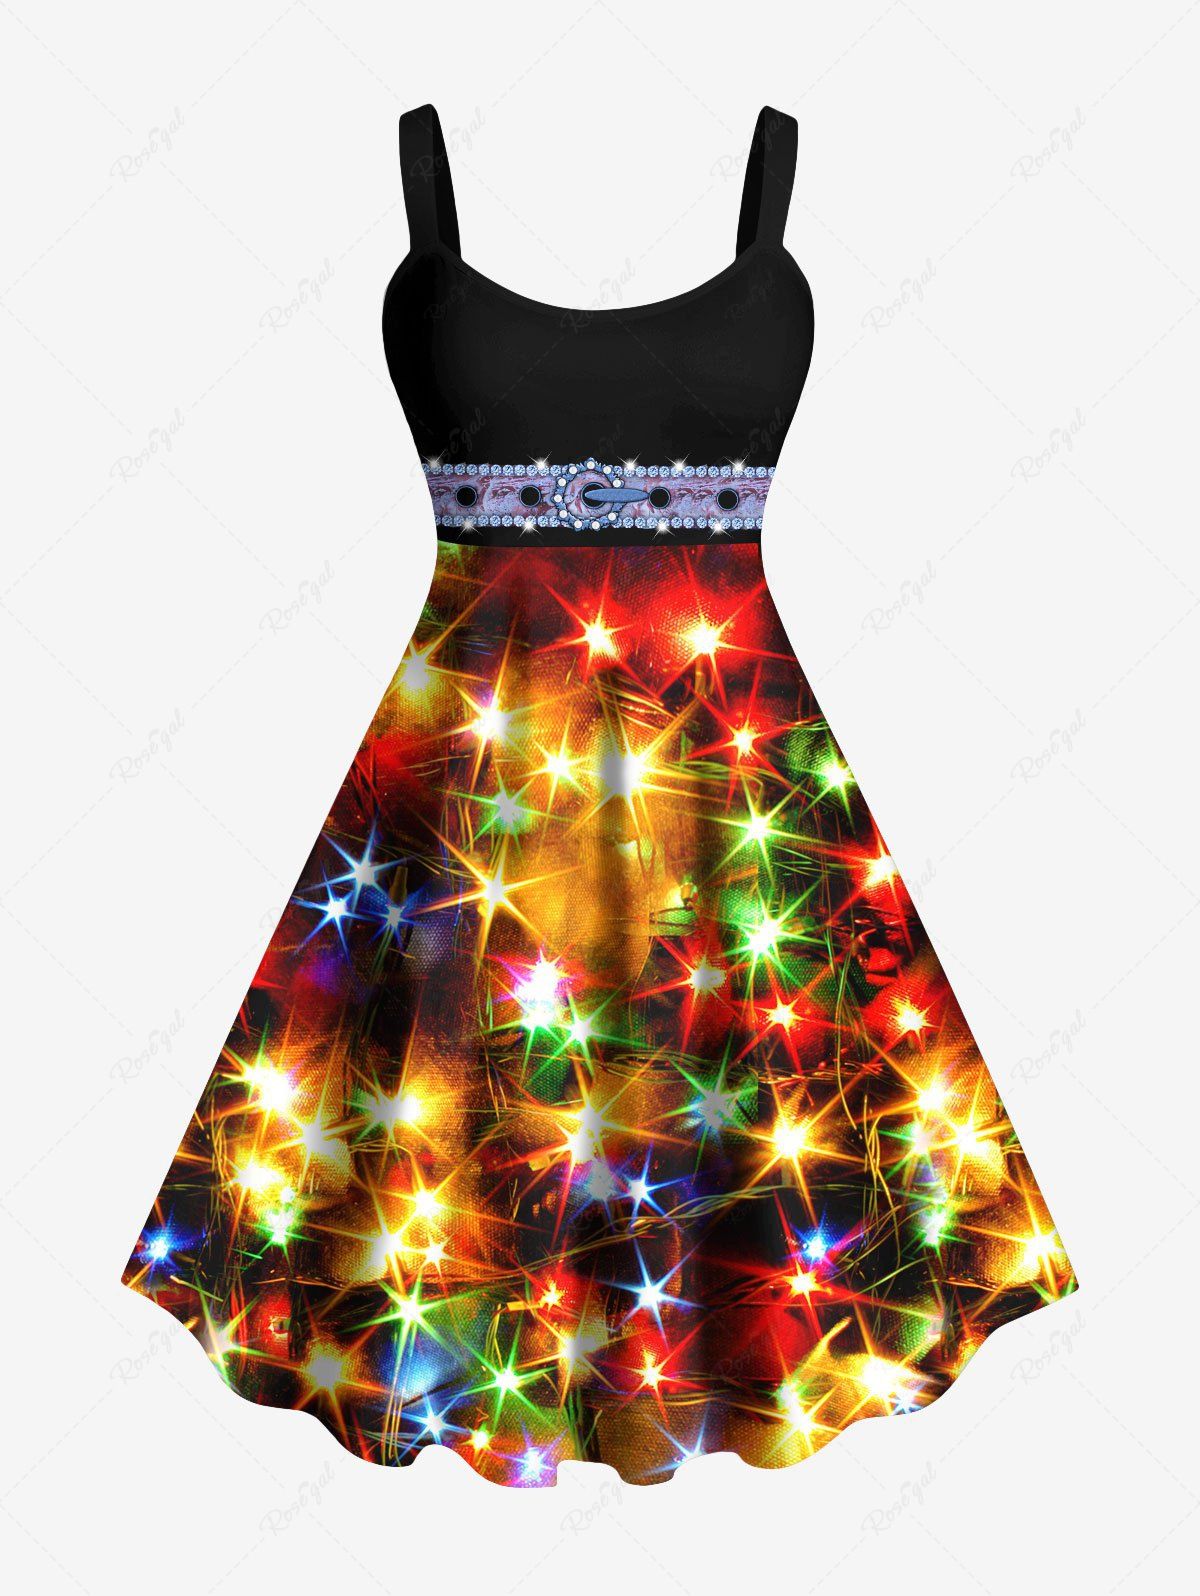 Chic Plus Size Buckle Belt Grommets Stars Glitter Sparkling Sequin 3D Print Tank Party Dress  